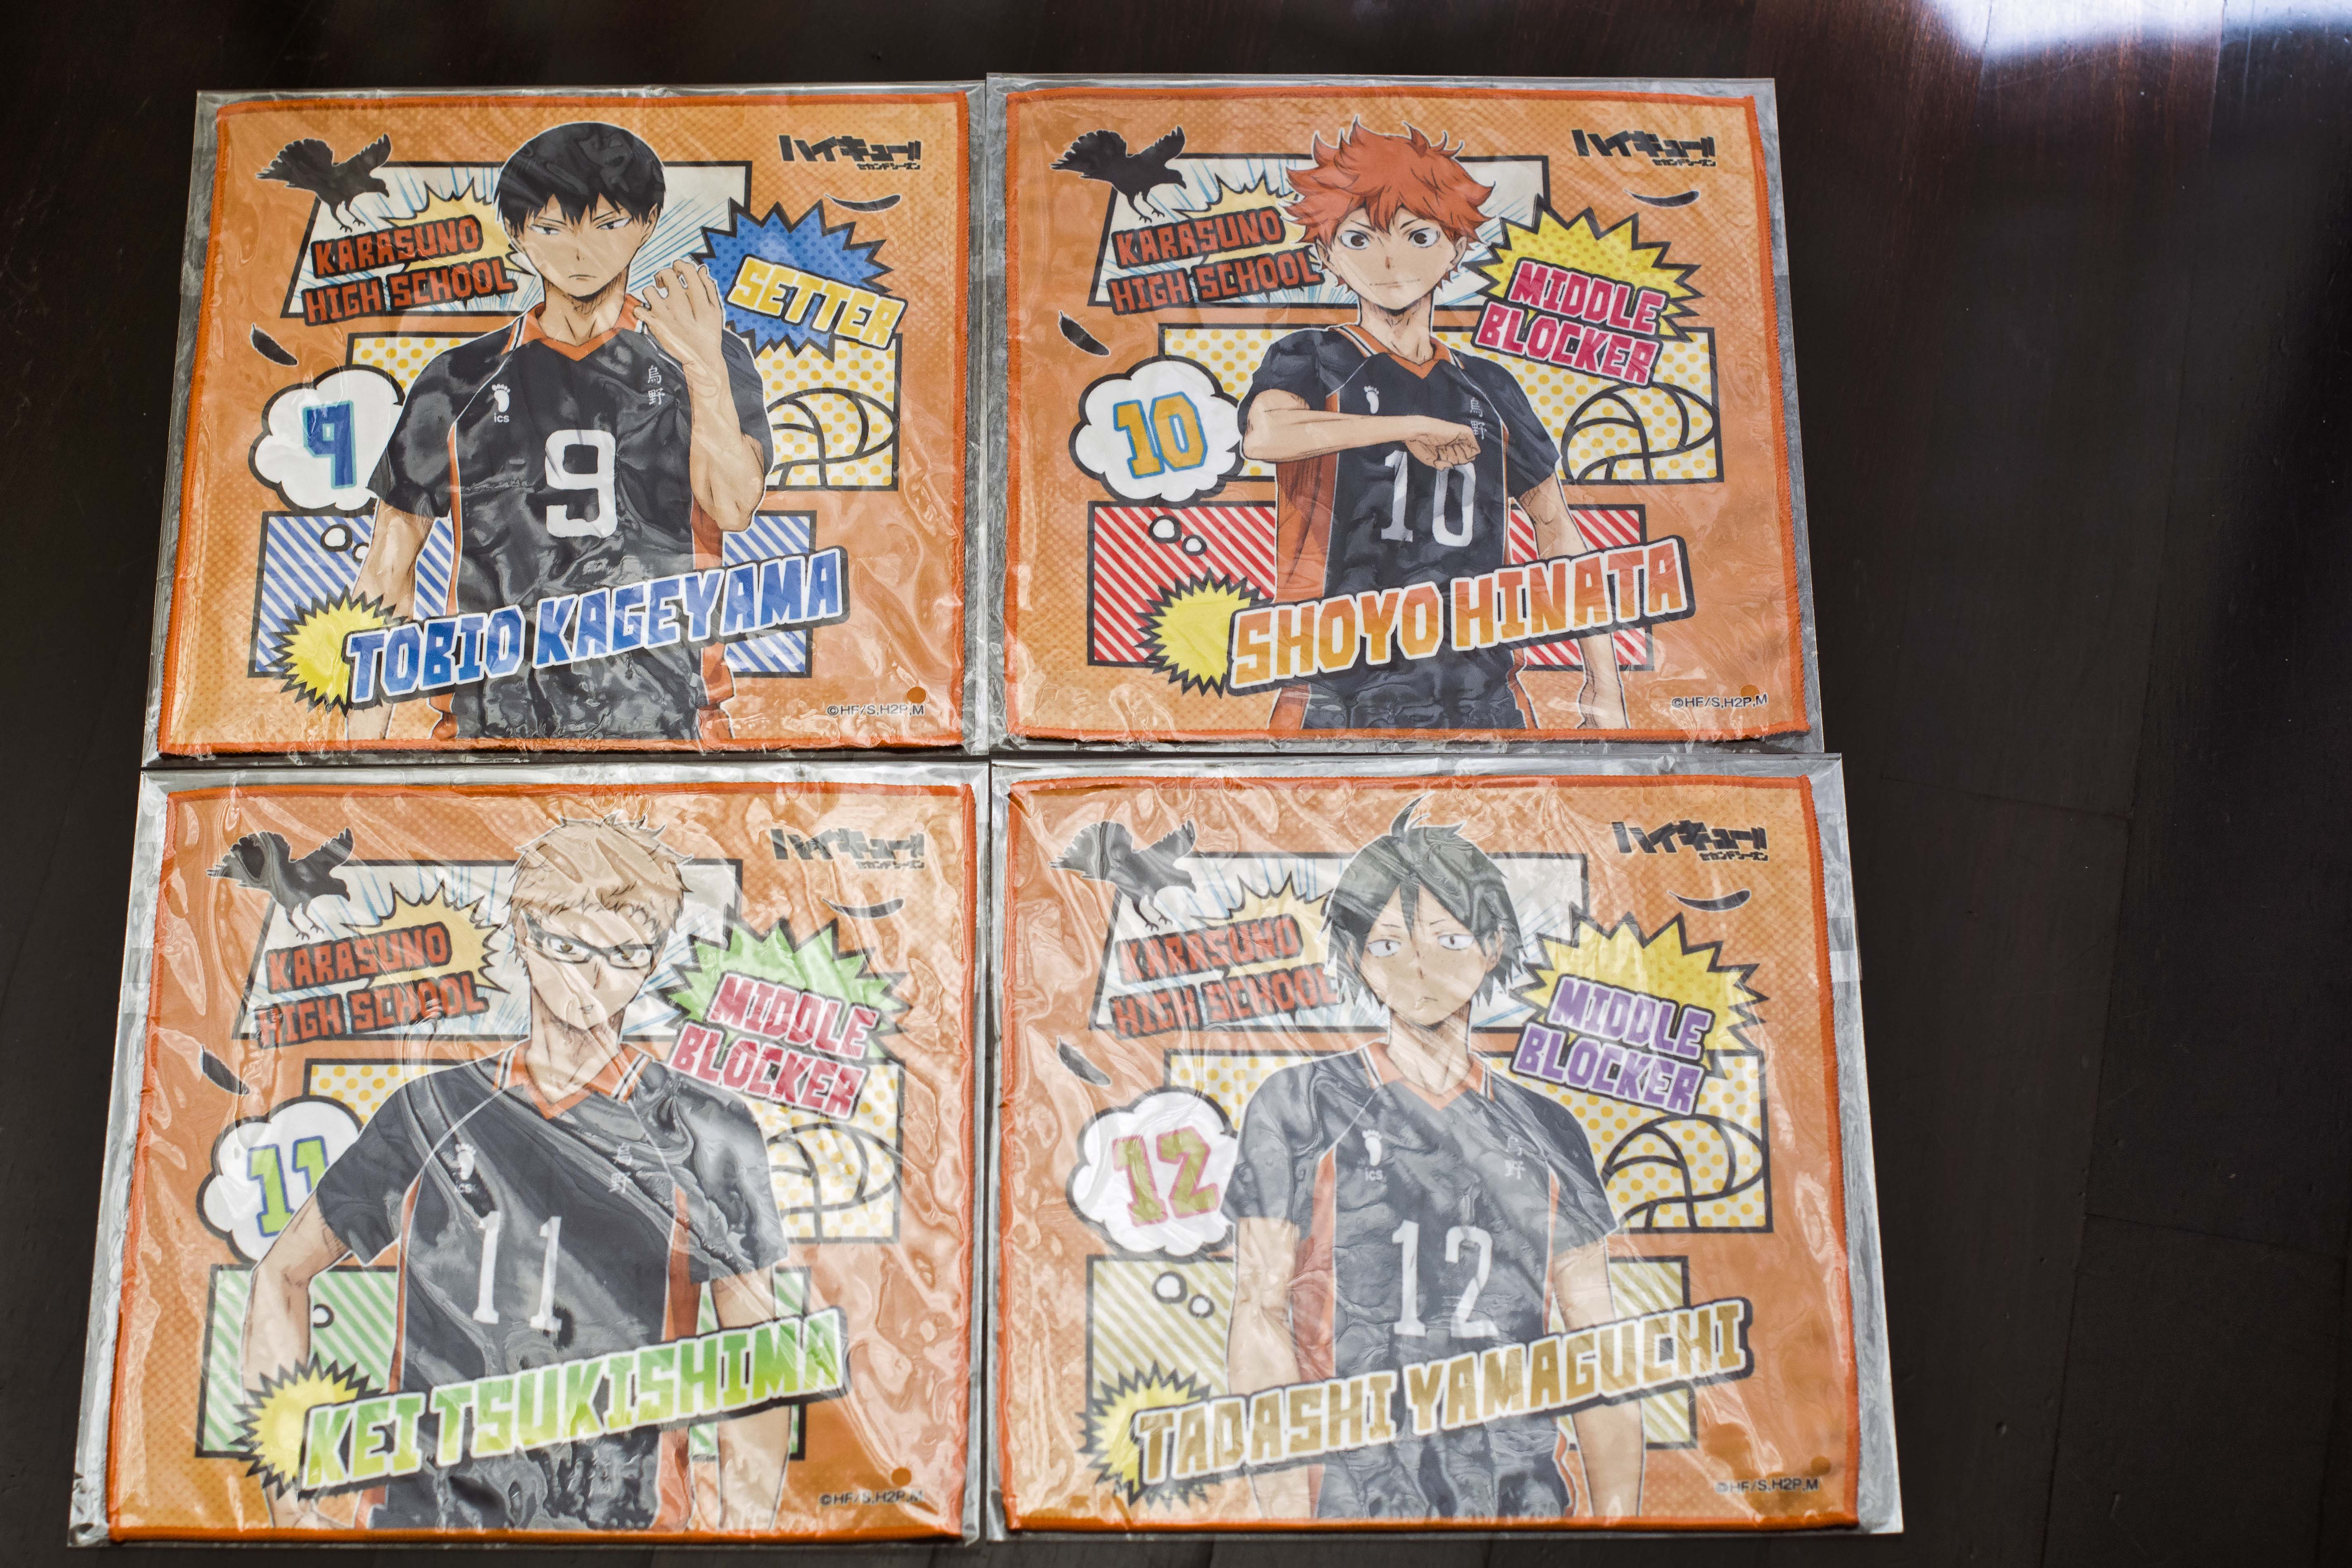 Unboxing: merchandise ufficiale dall'anime Haikyuu!!